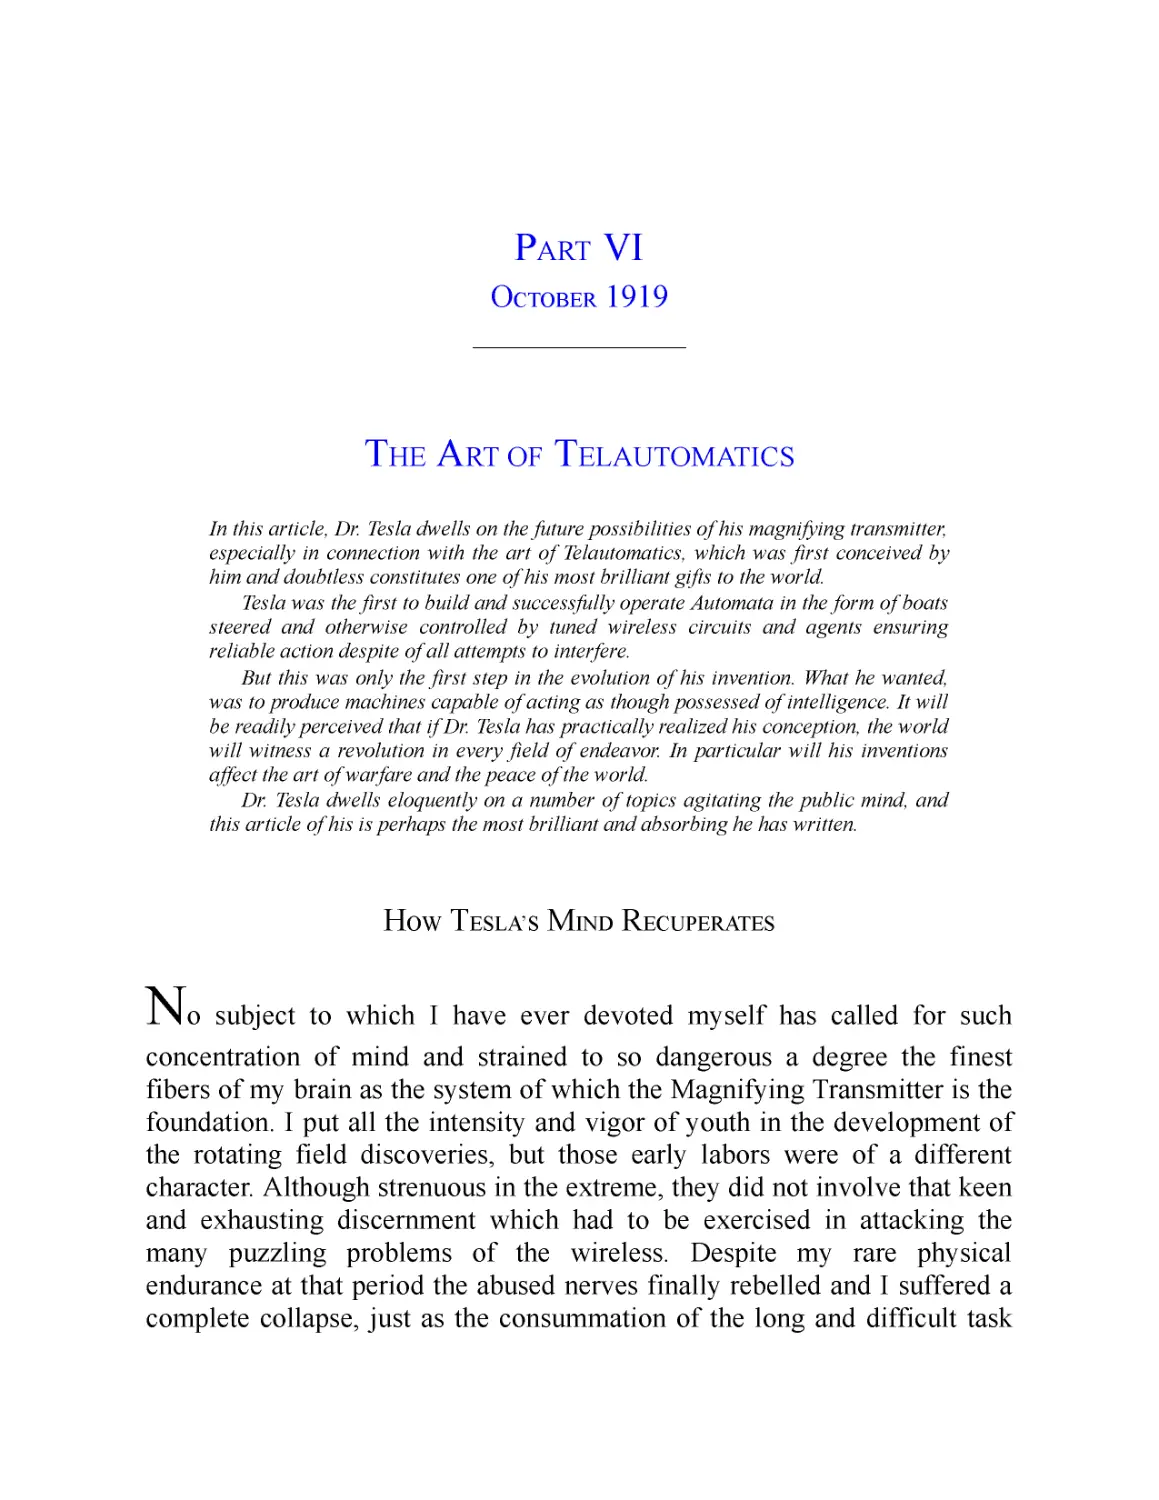 ﻿Part VI: The Art of Telautomatic